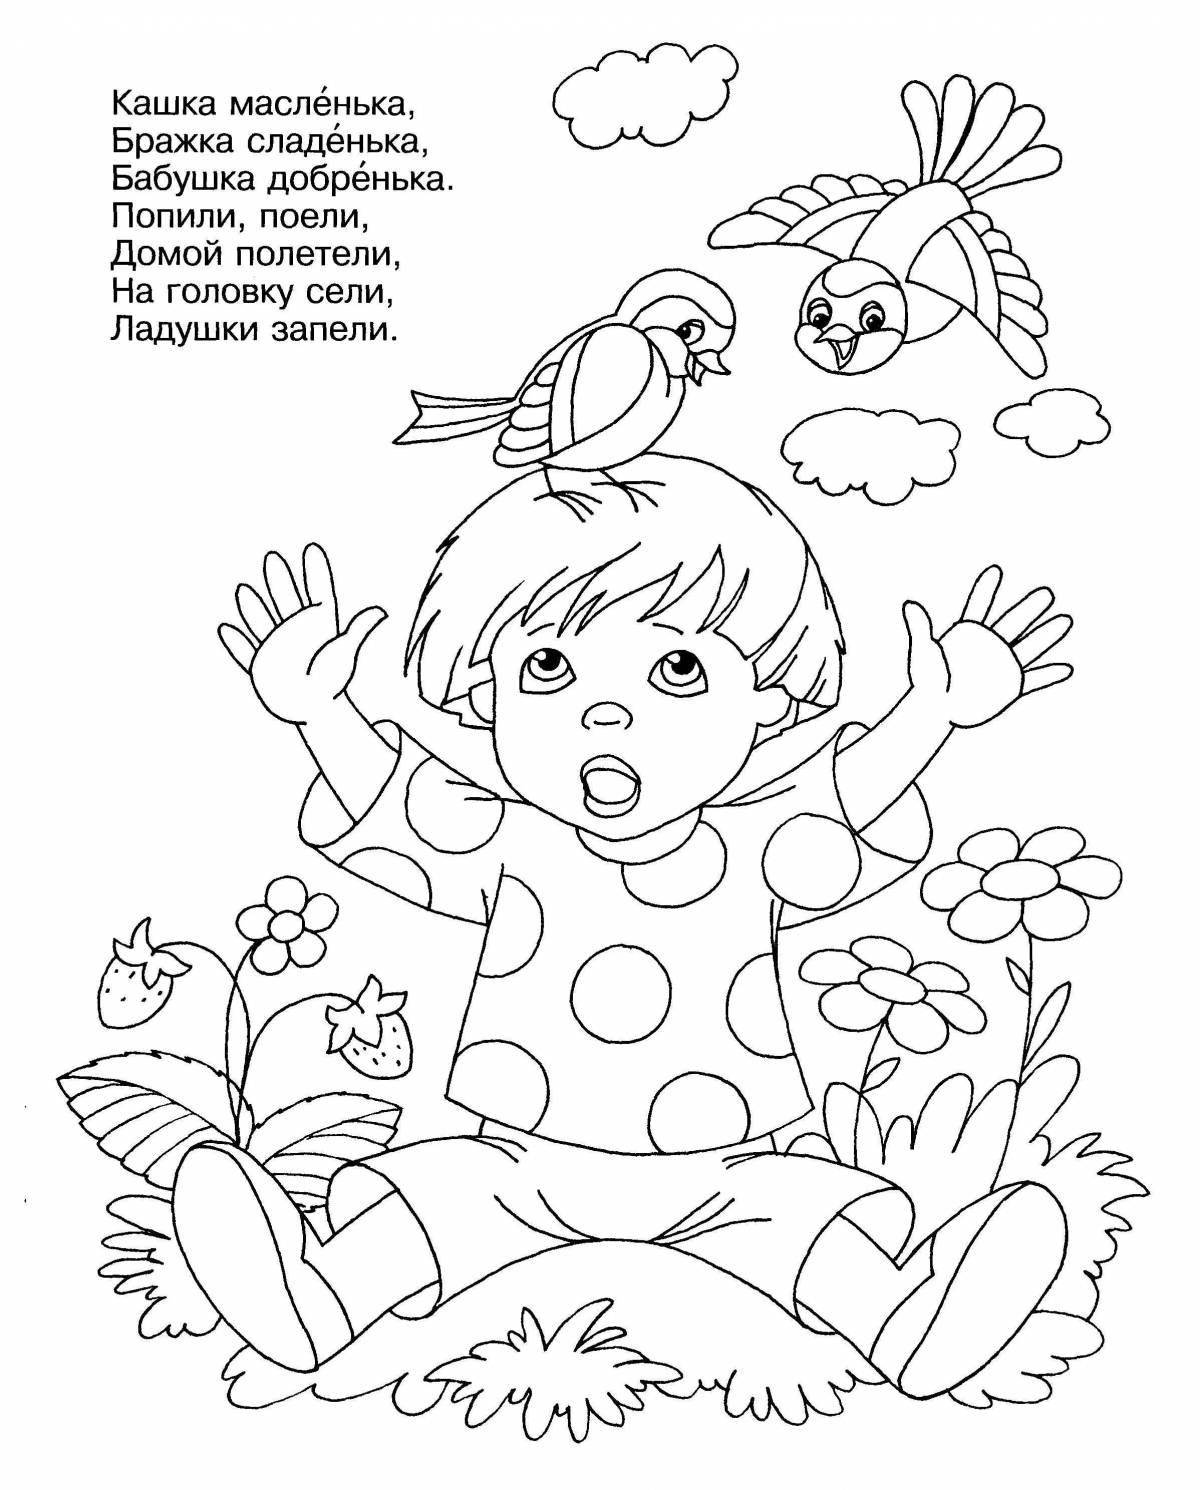 Barto's fun coloring book for preschoolers